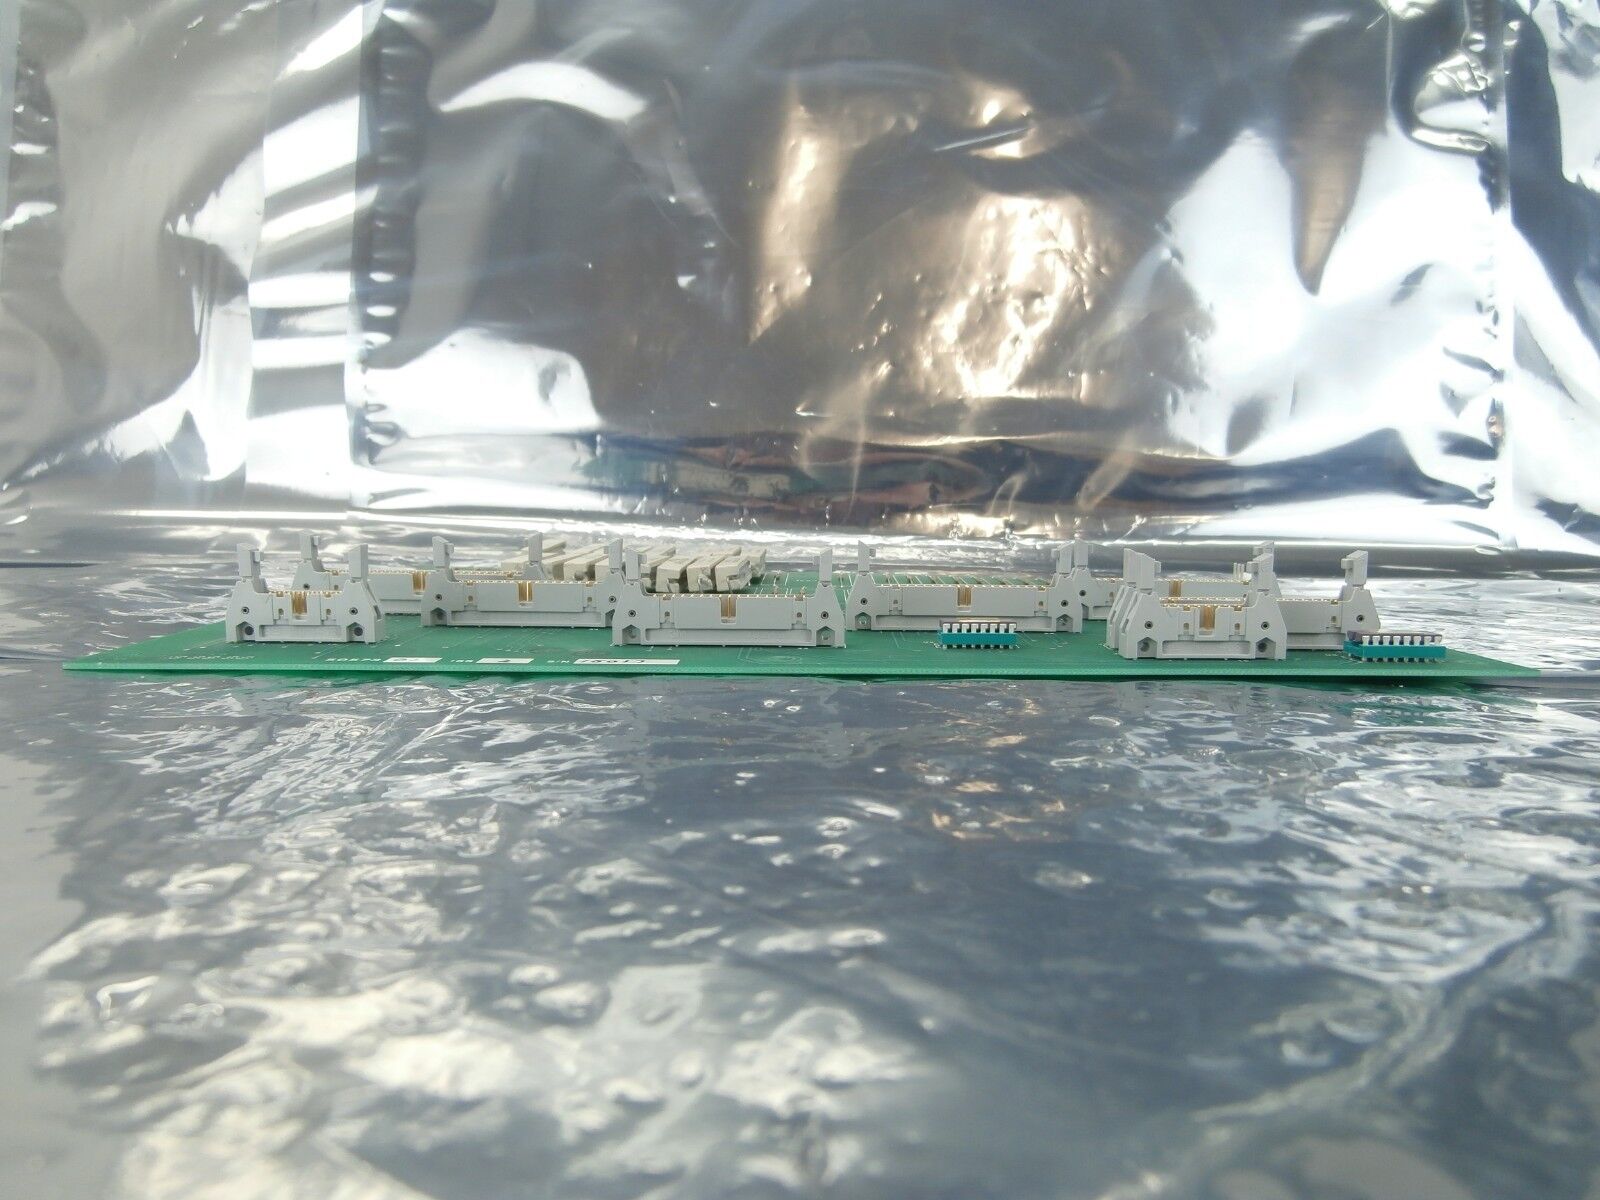 Motorola 5057301 LE Tester Board PCB Used Working